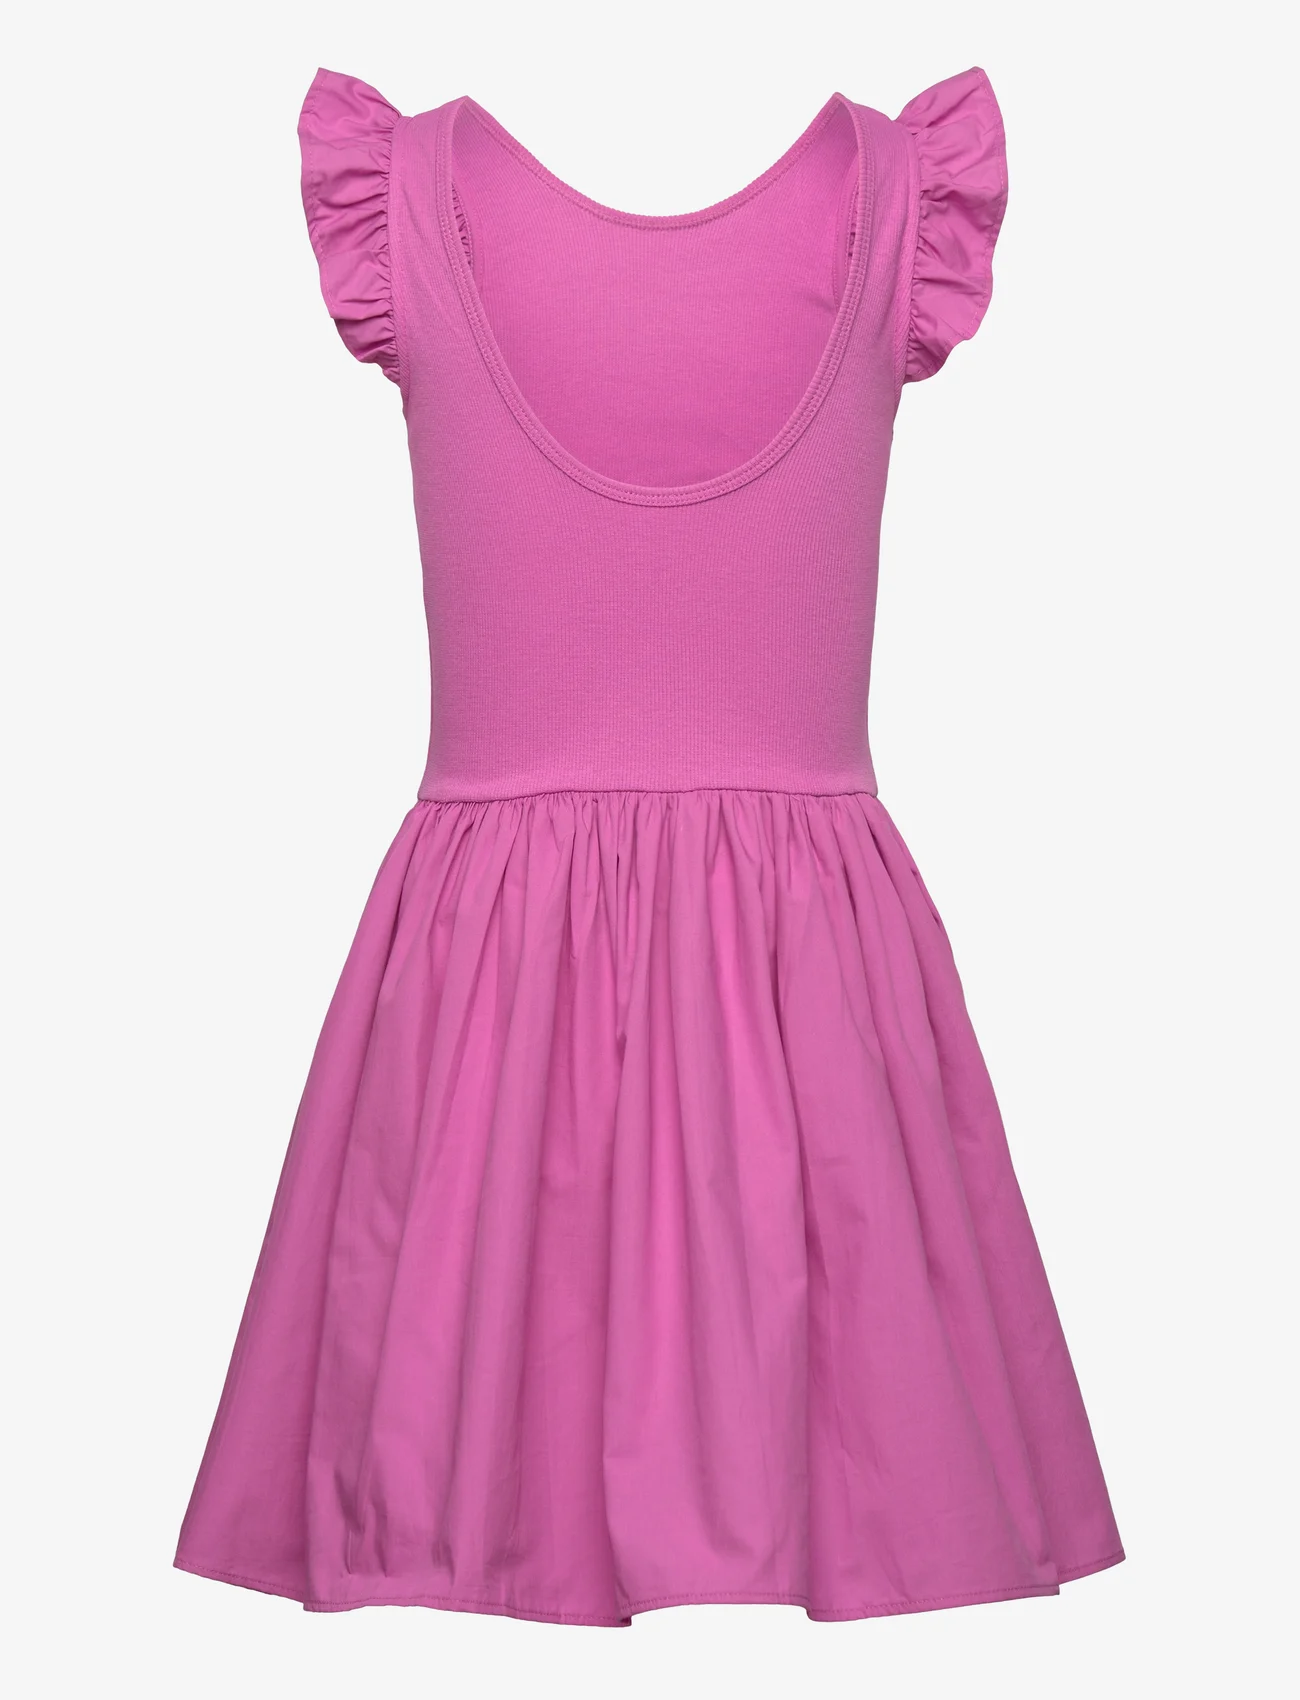 Molo - Cloudia - sleeveless casual dresses - purple pink - 1